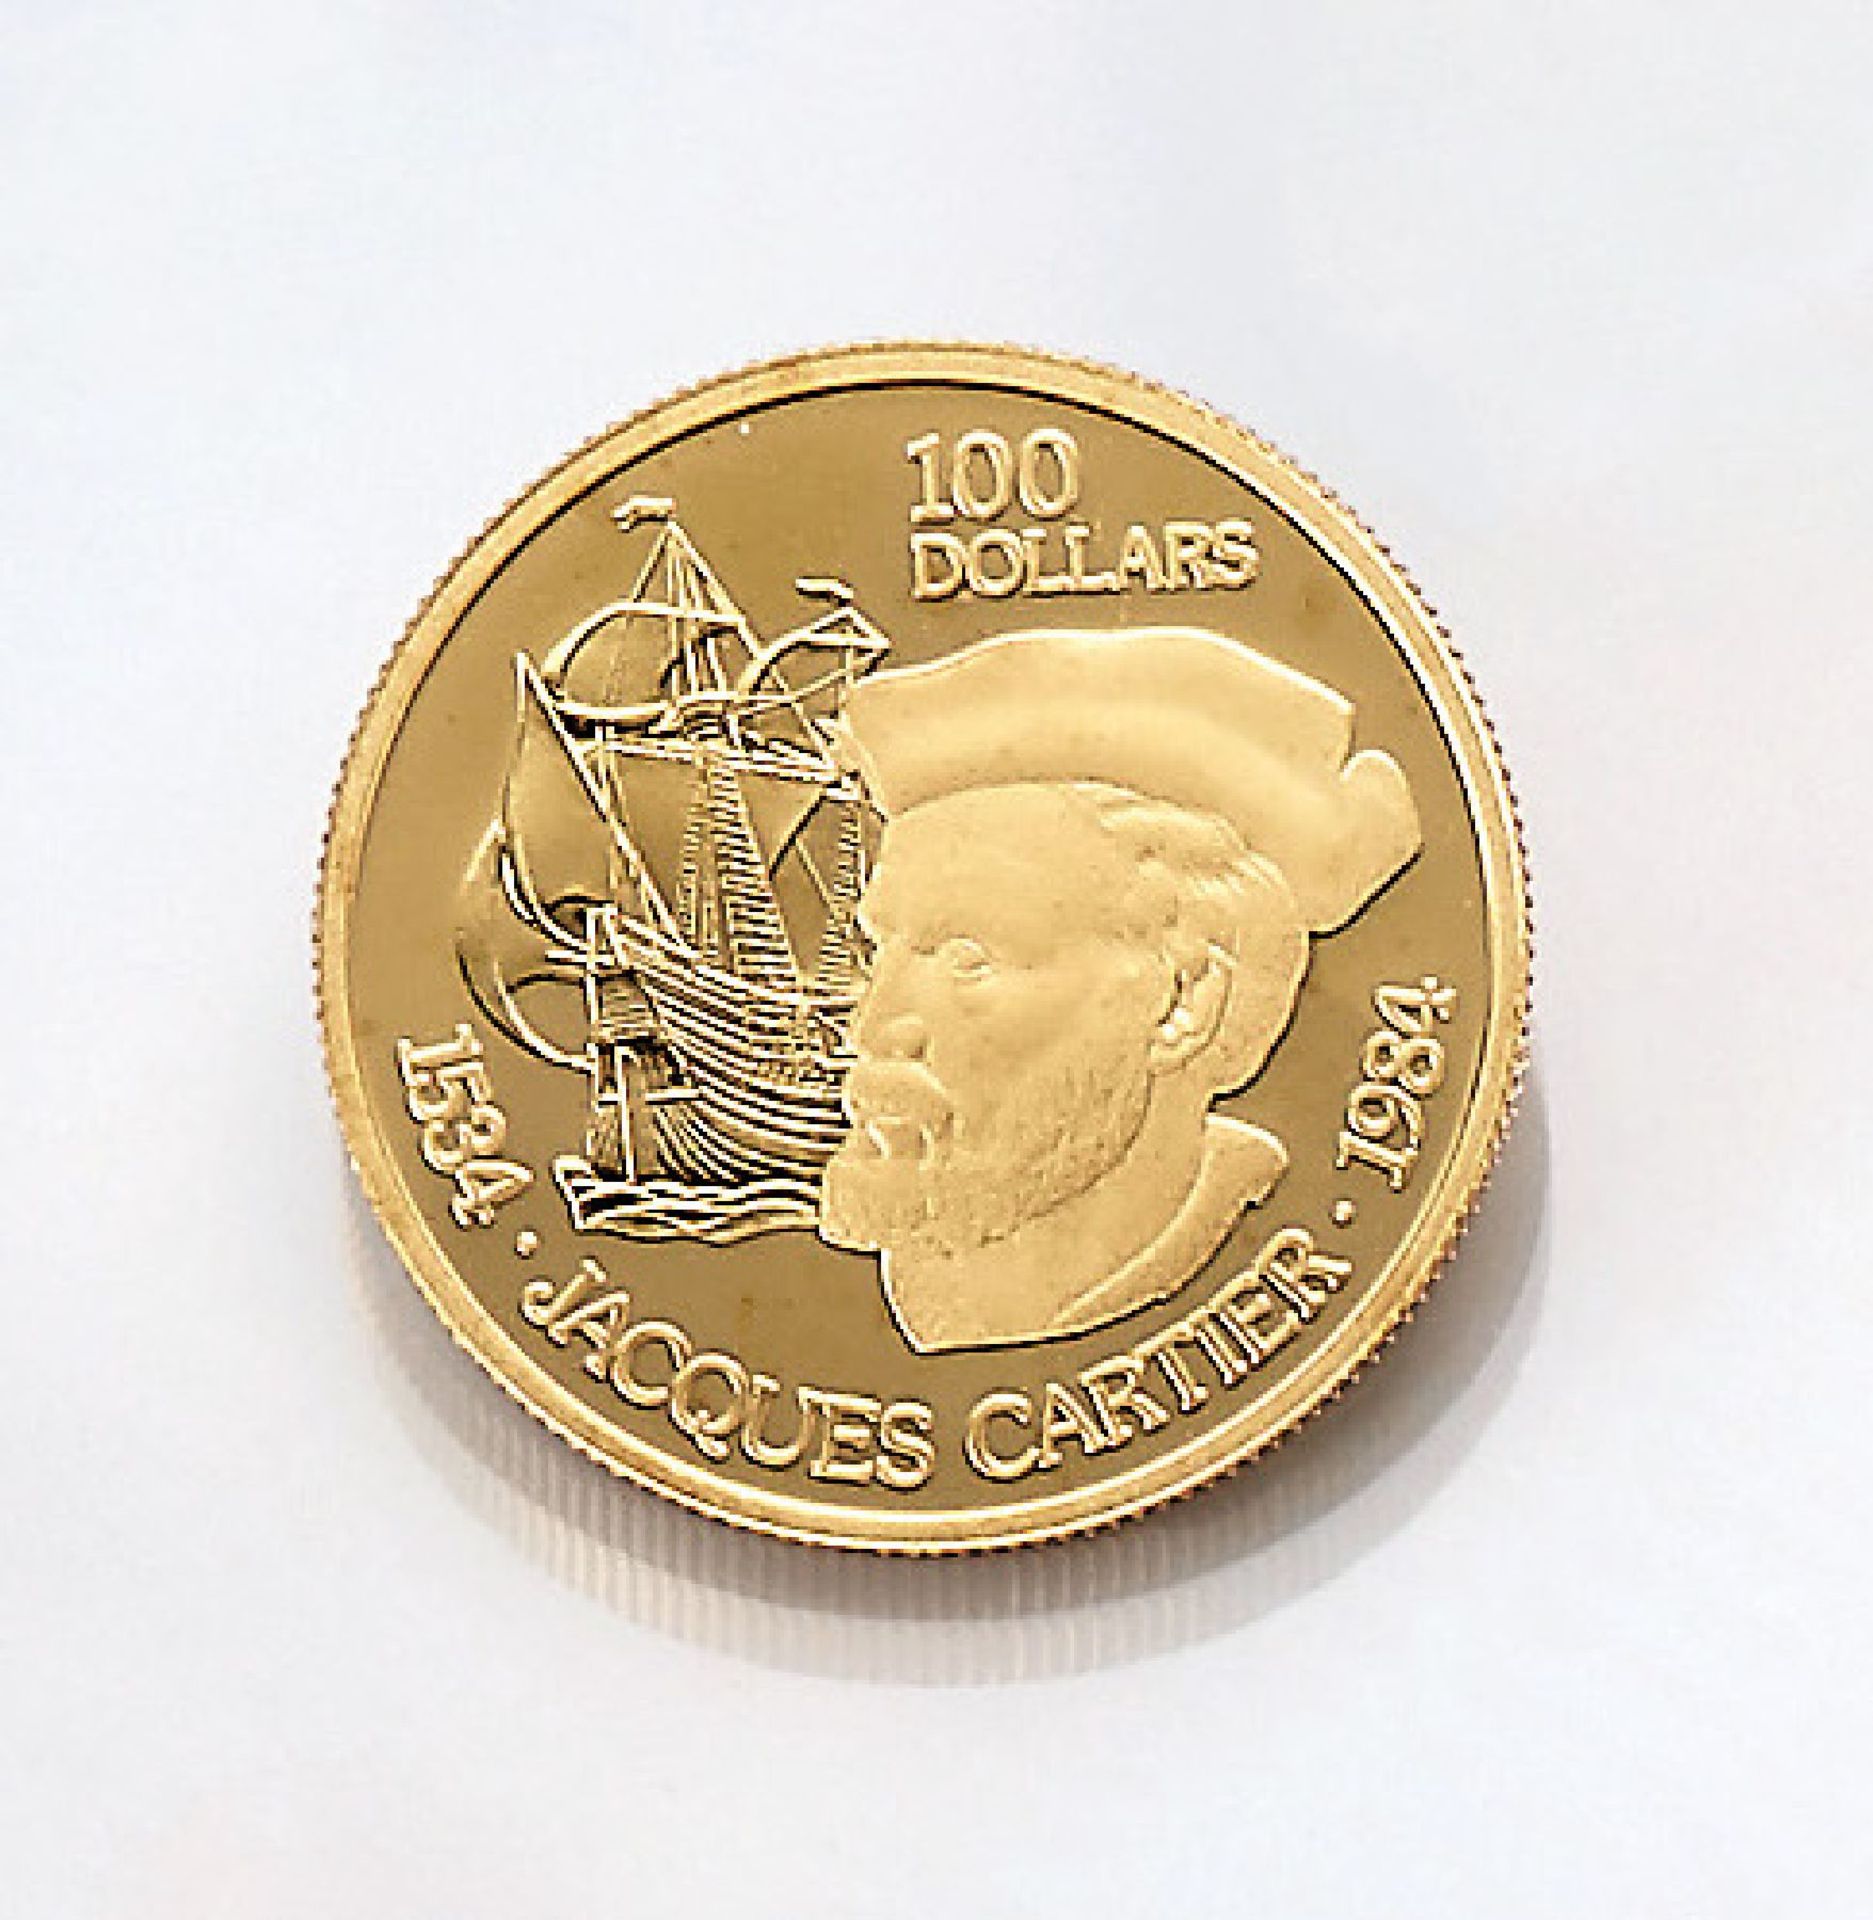 Goldmünze, 100 Dollars, Canada, 1984, Elizabeth II., Jacques Cartier 1534-1984Gold coin, 100